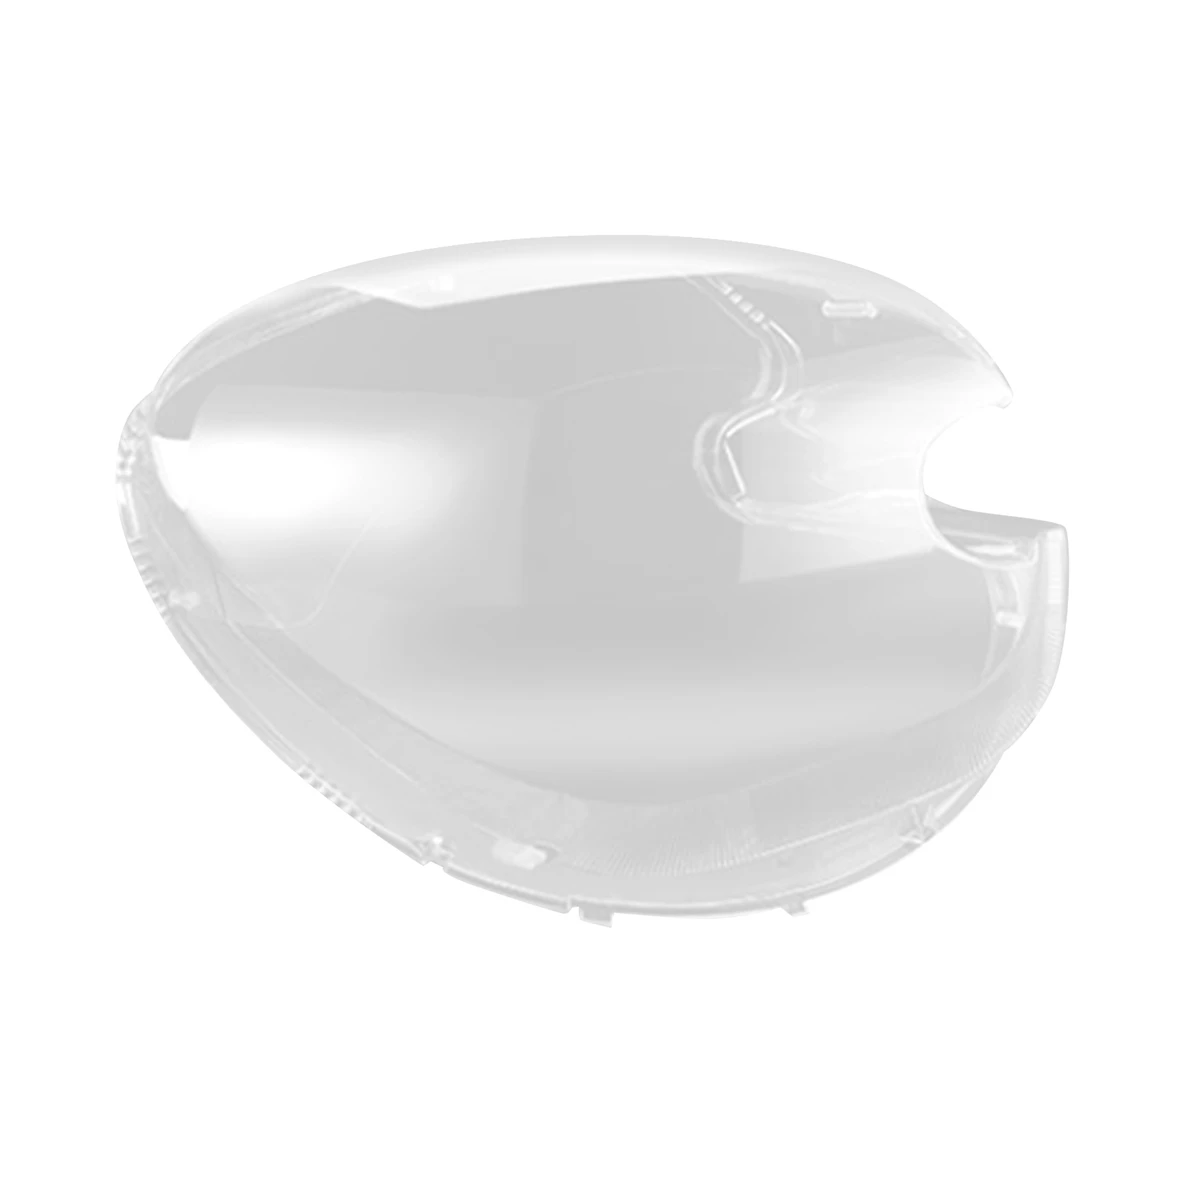 Абажур лампы правой боковой фары автомобиля Прозрачная крышка лампы головного света Корпус фары для Mini R60 2011-2016